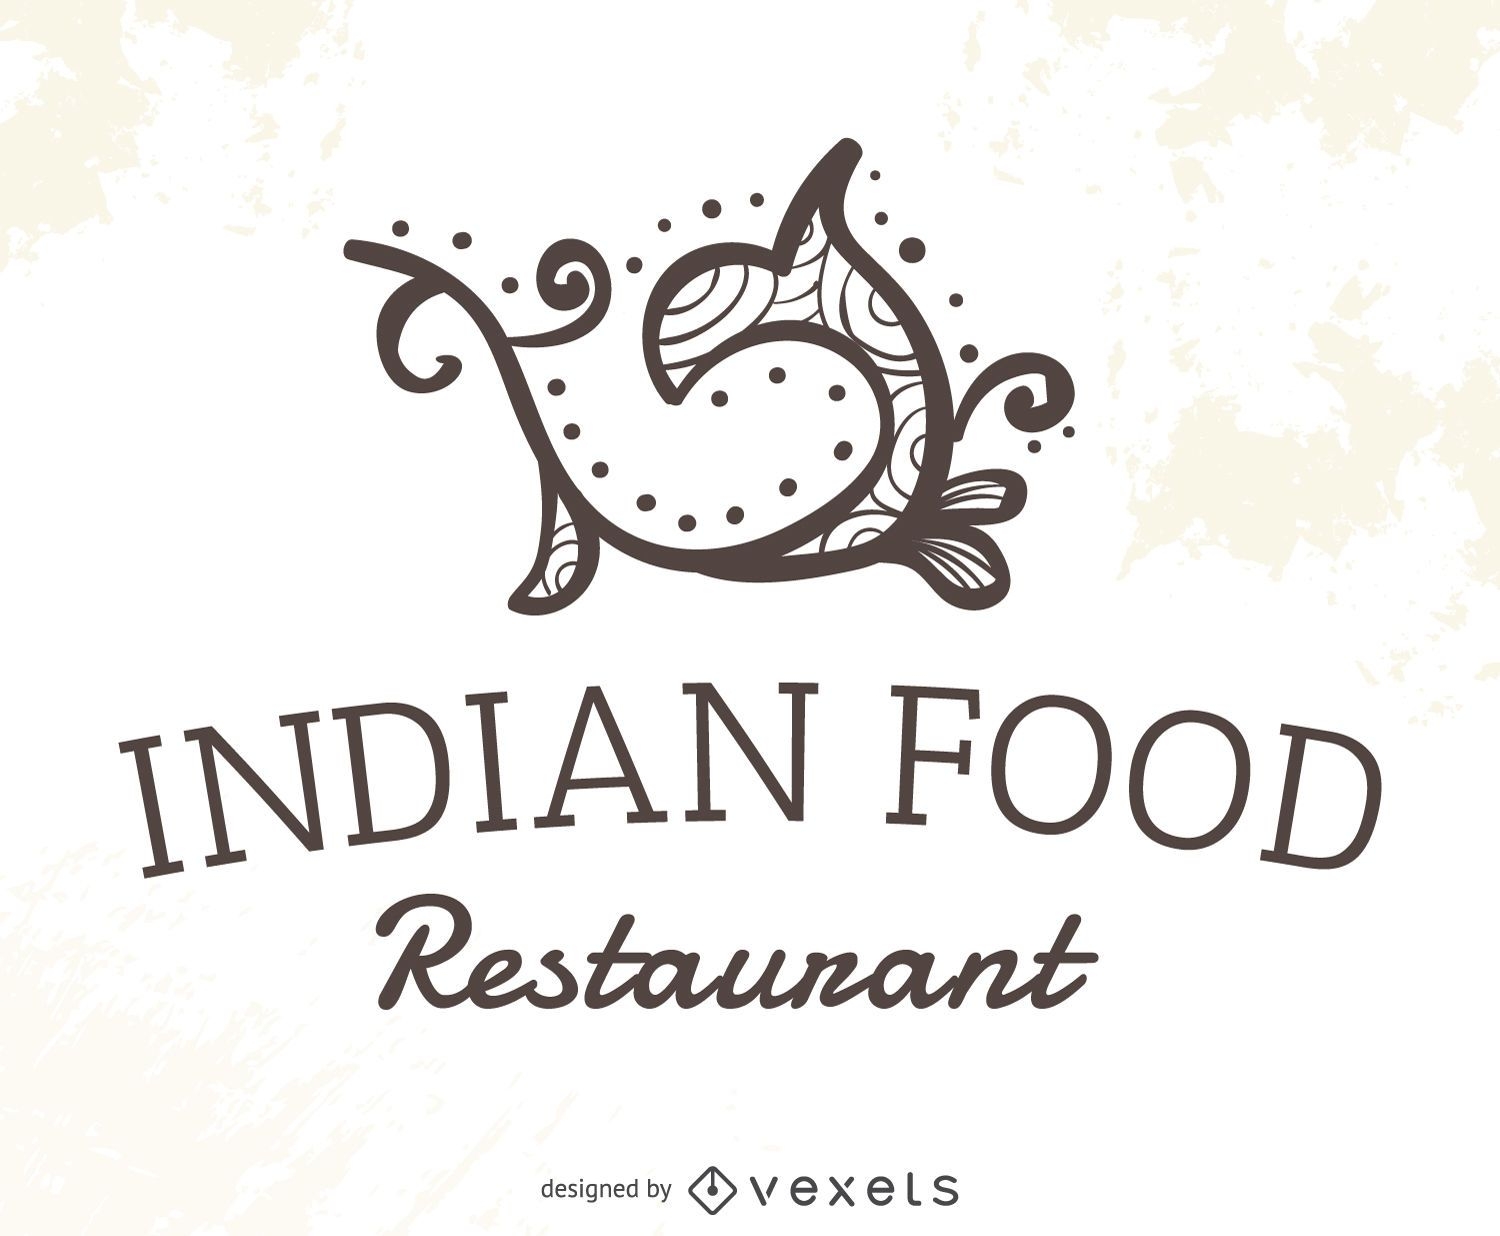 Indian food restaurant logo